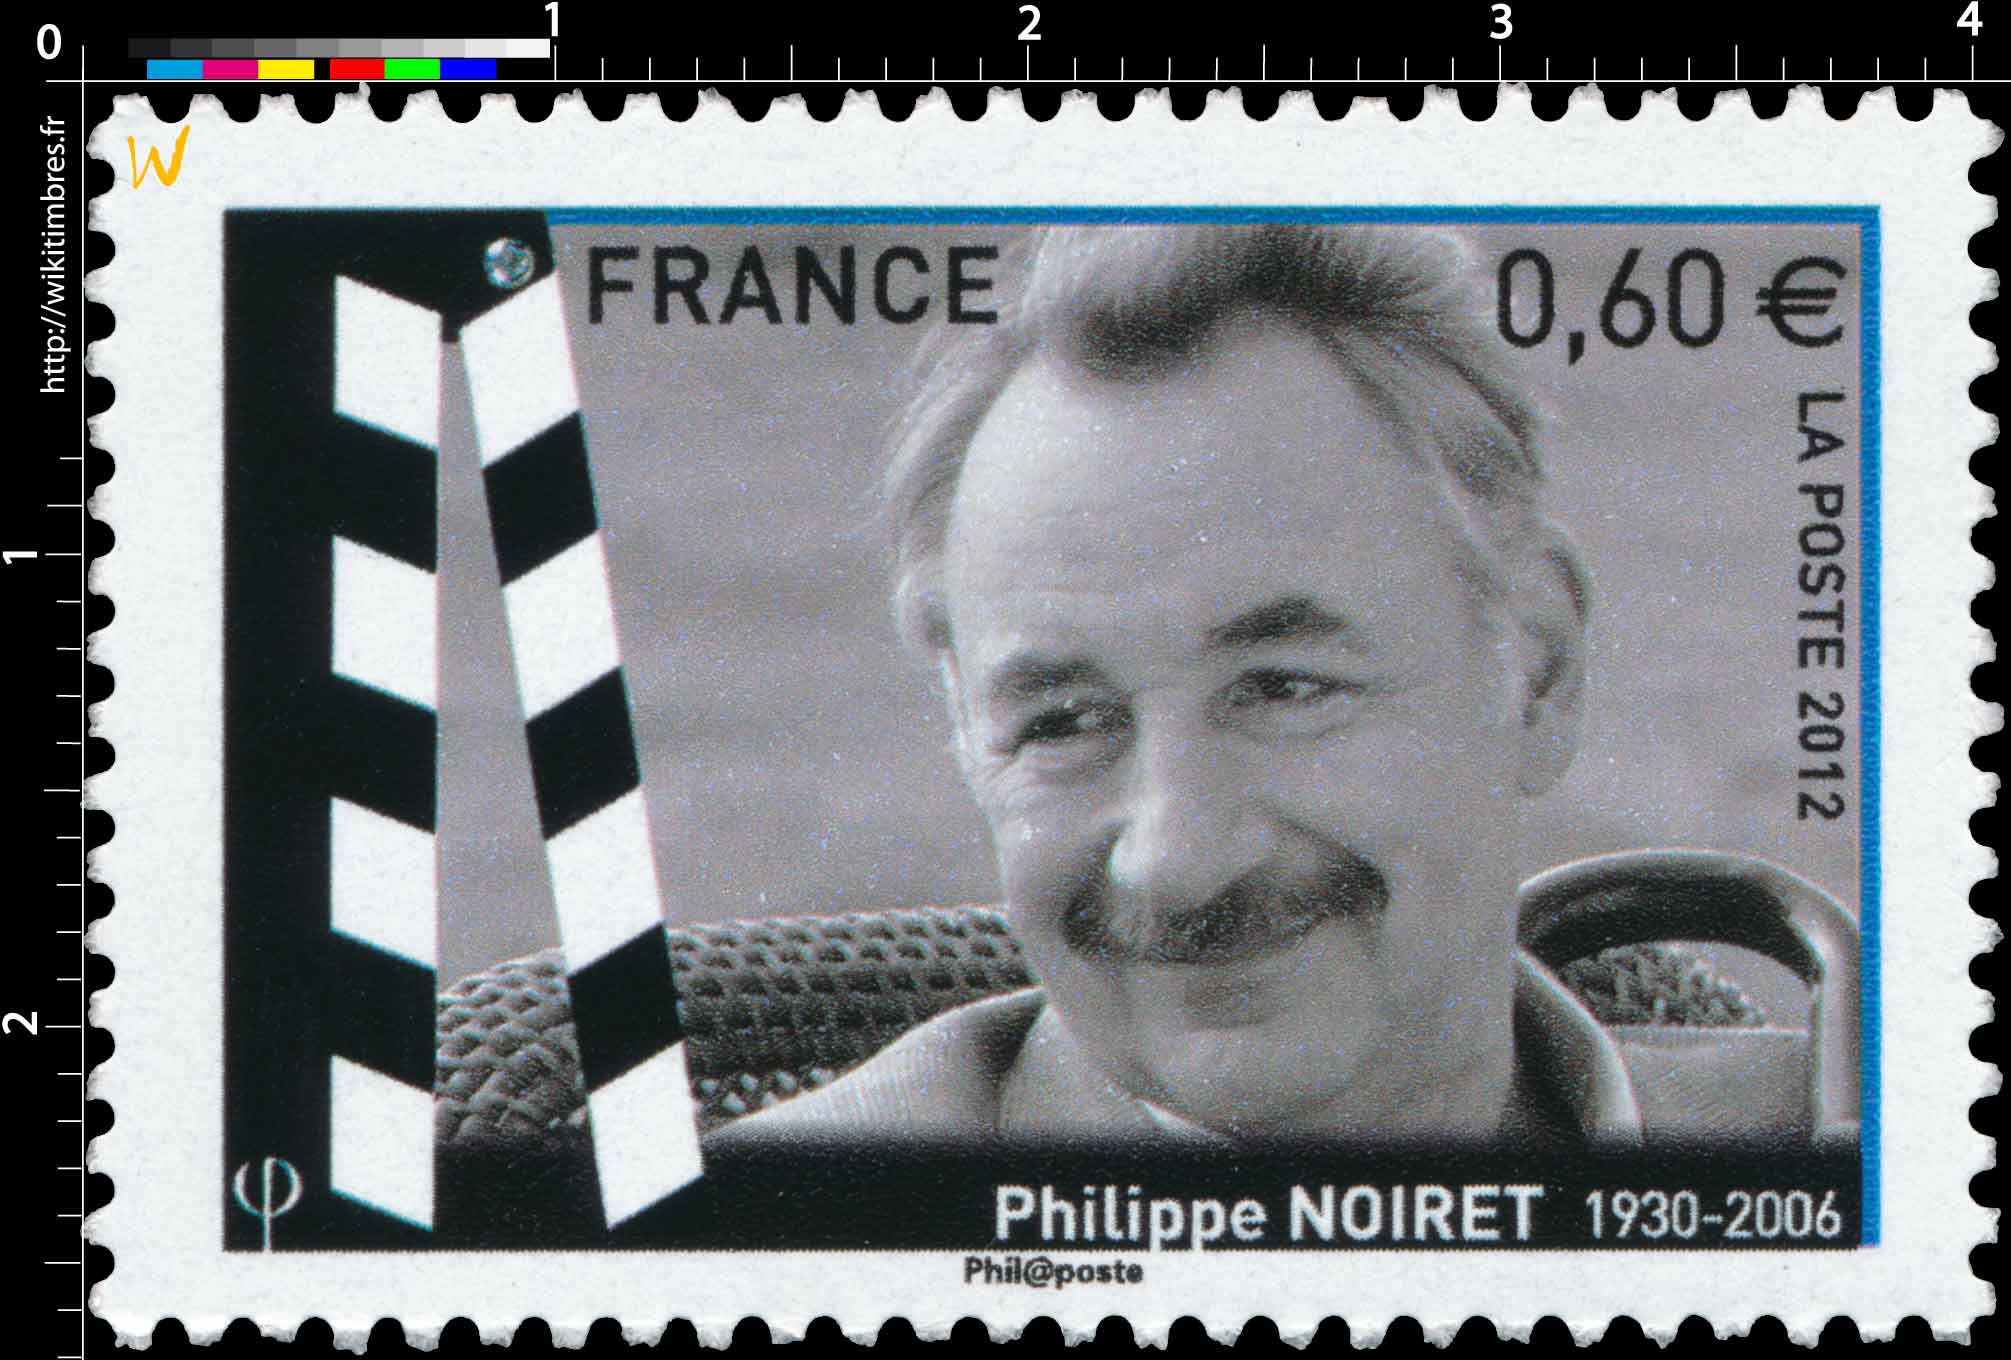 Philippe Noiret 1930-2006